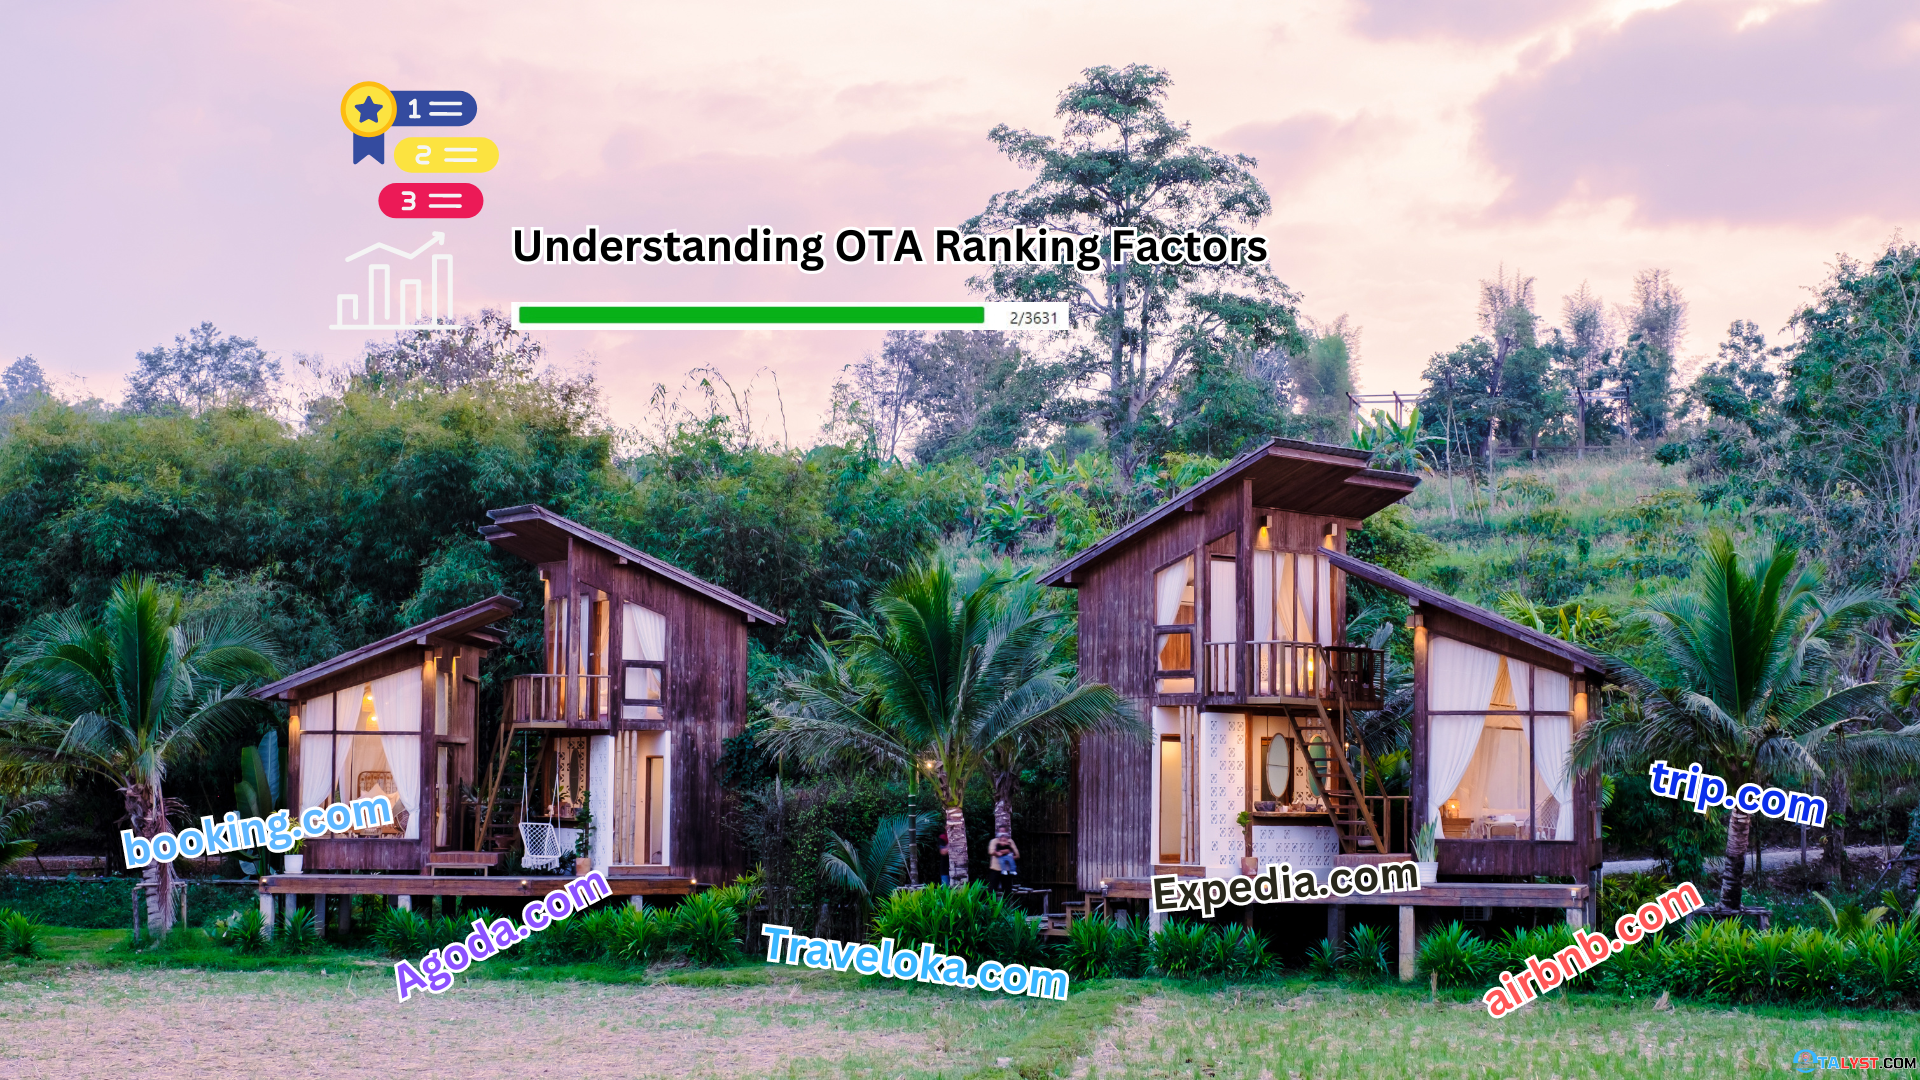 Understanding OTA Ranking Factors - Optimizing Online Travel Agency Channel Ota Ranking Strategies For Improved Visibility (3)